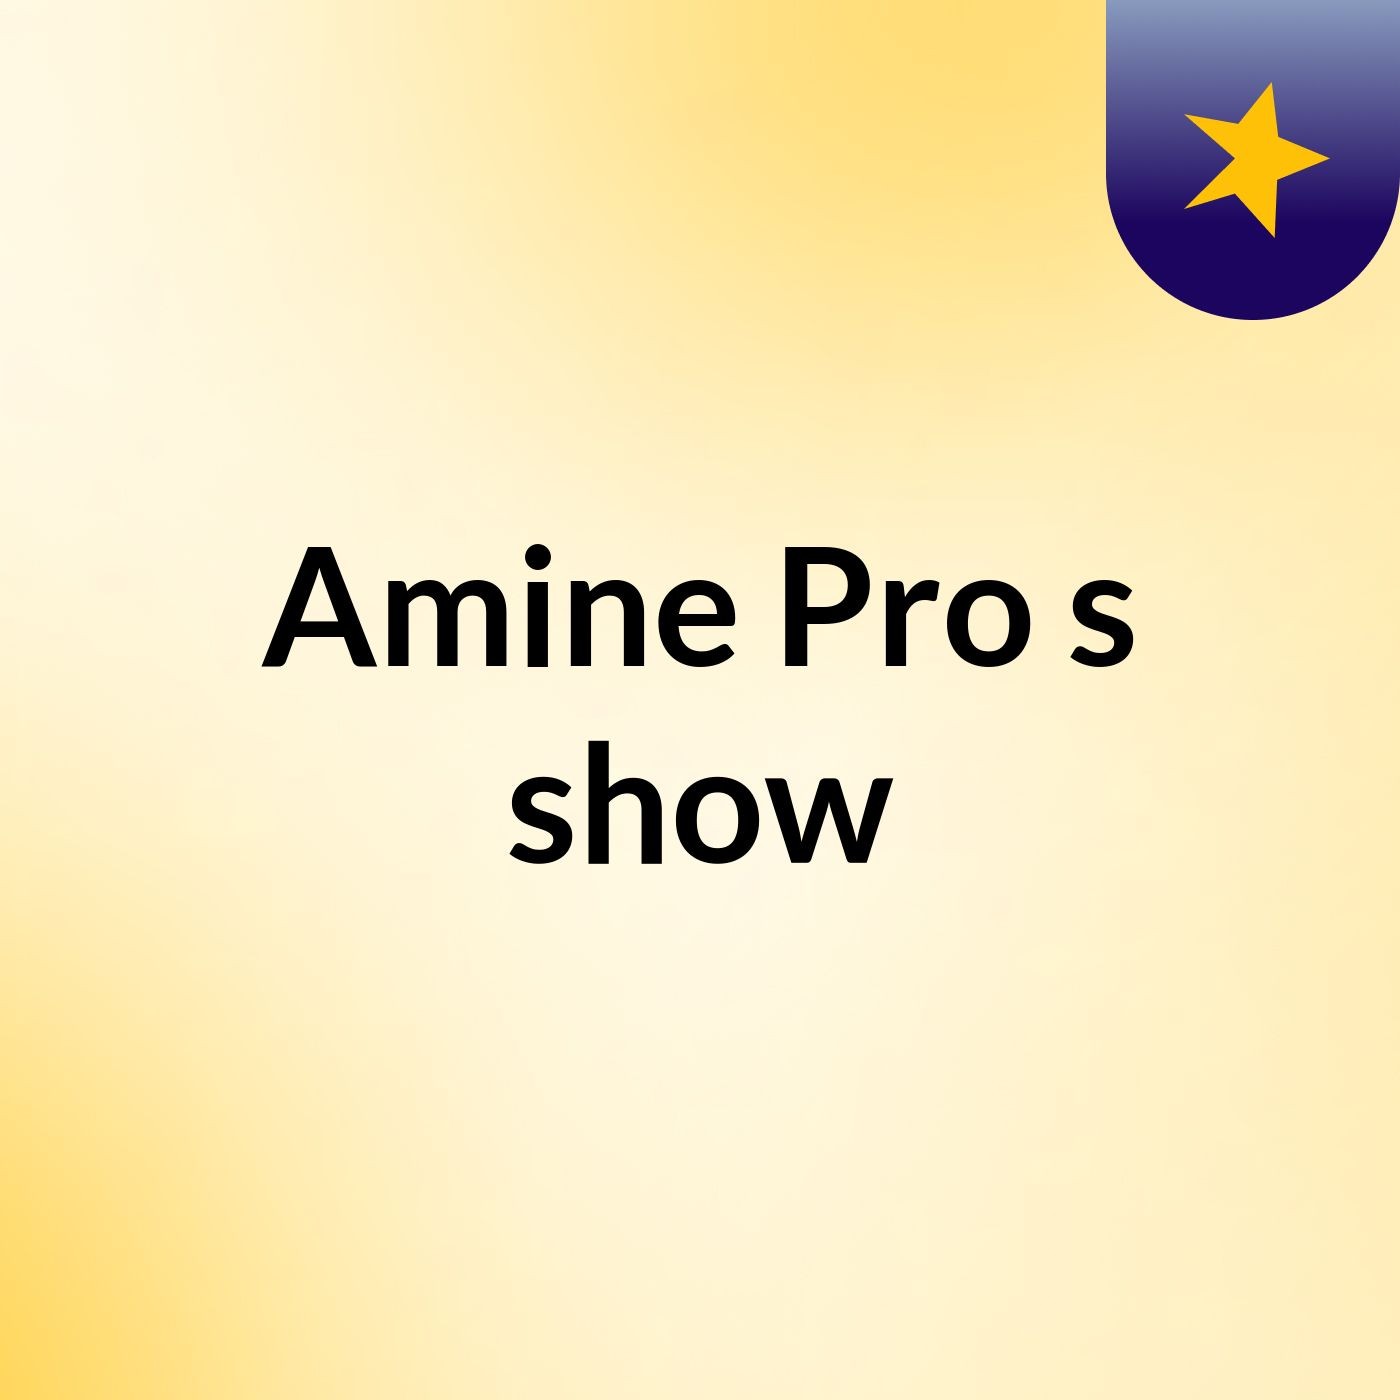 Amine Pro's show